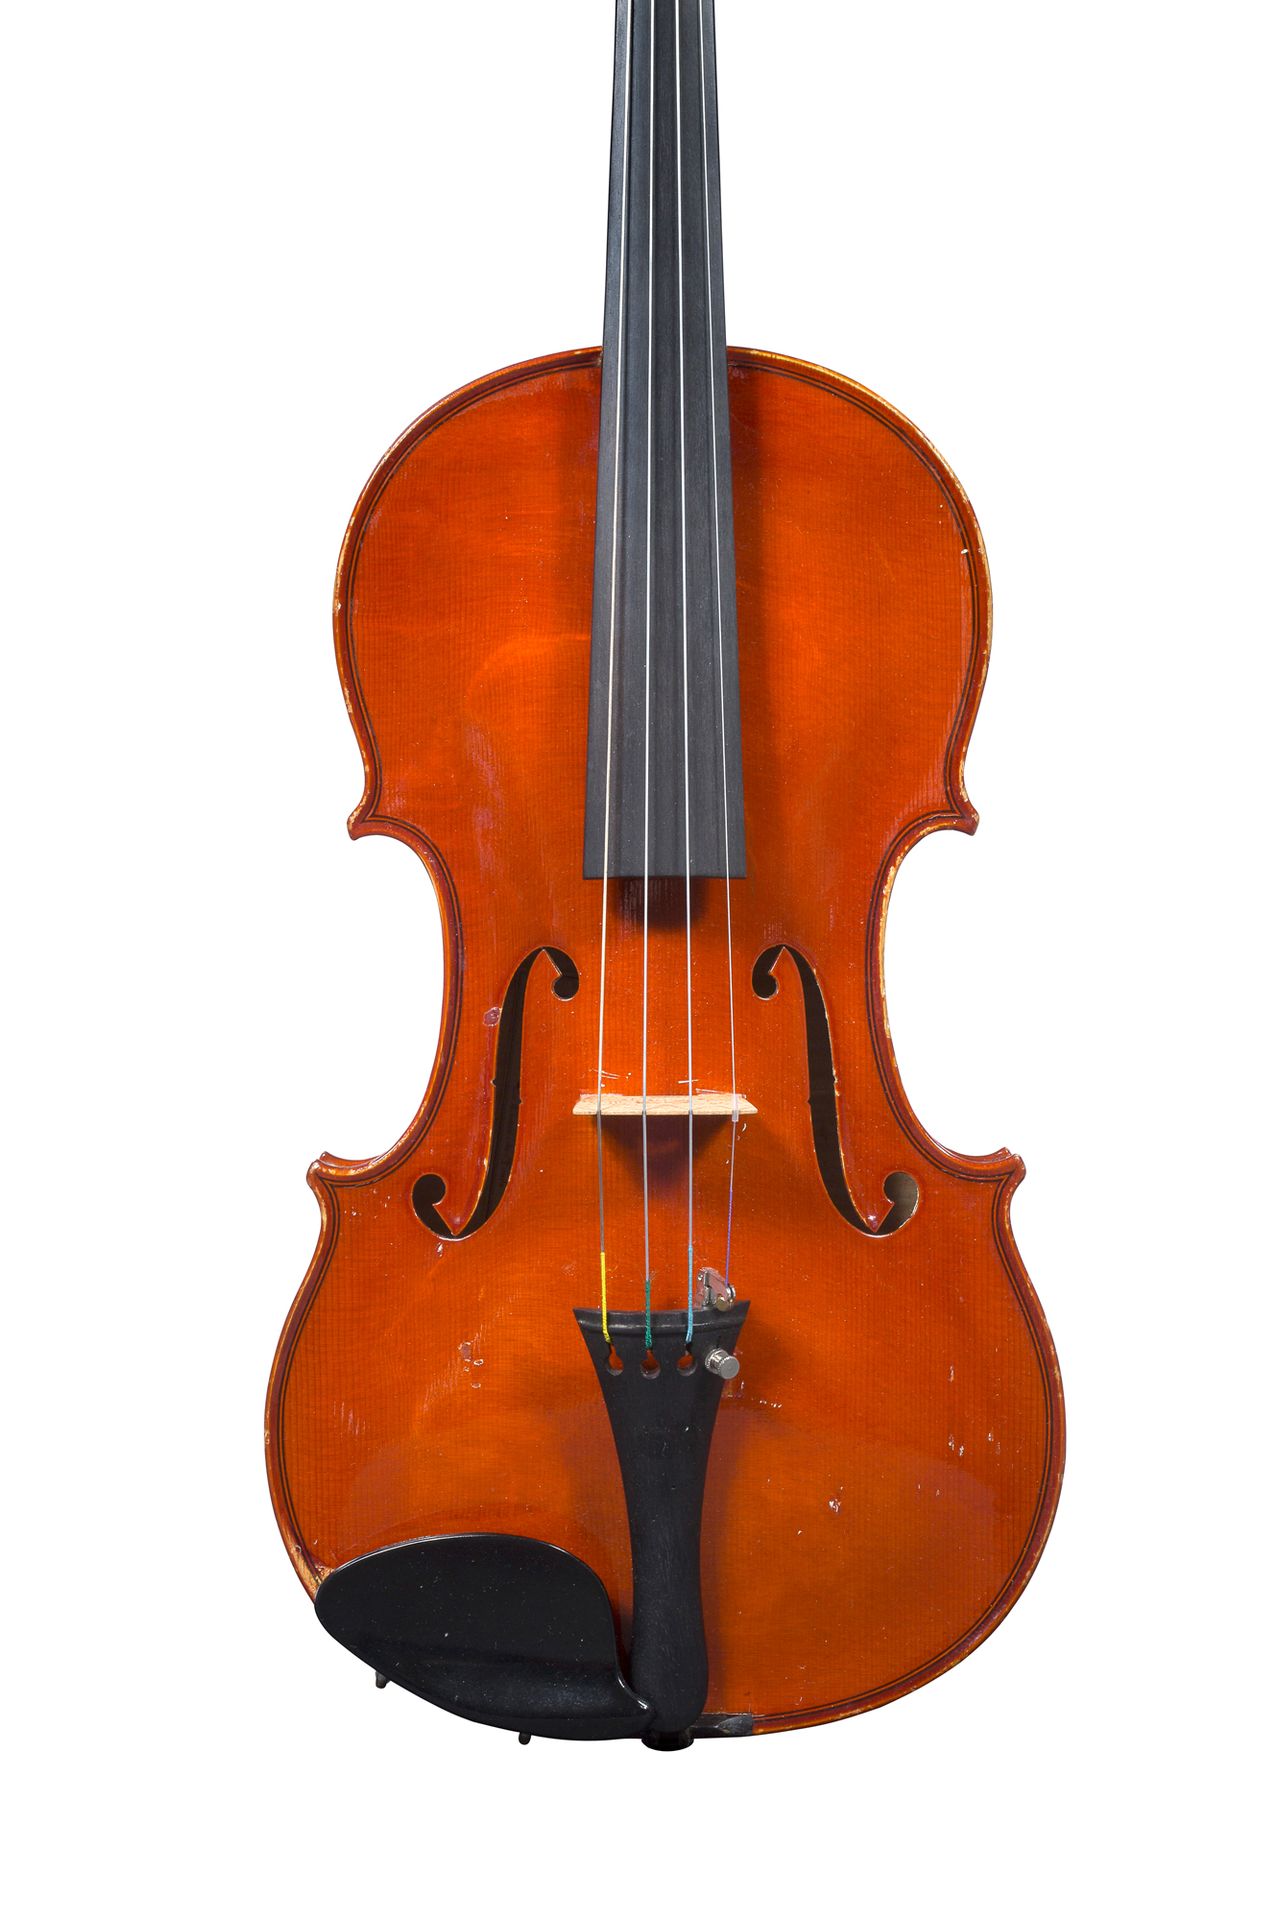 Null 西格弗里德-佩佐尔德的小提琴
1930年在拉绍德封制造
有Siegfried Petzold的标签和铁印
状况良好
随时可以演奏 
背面360毫米